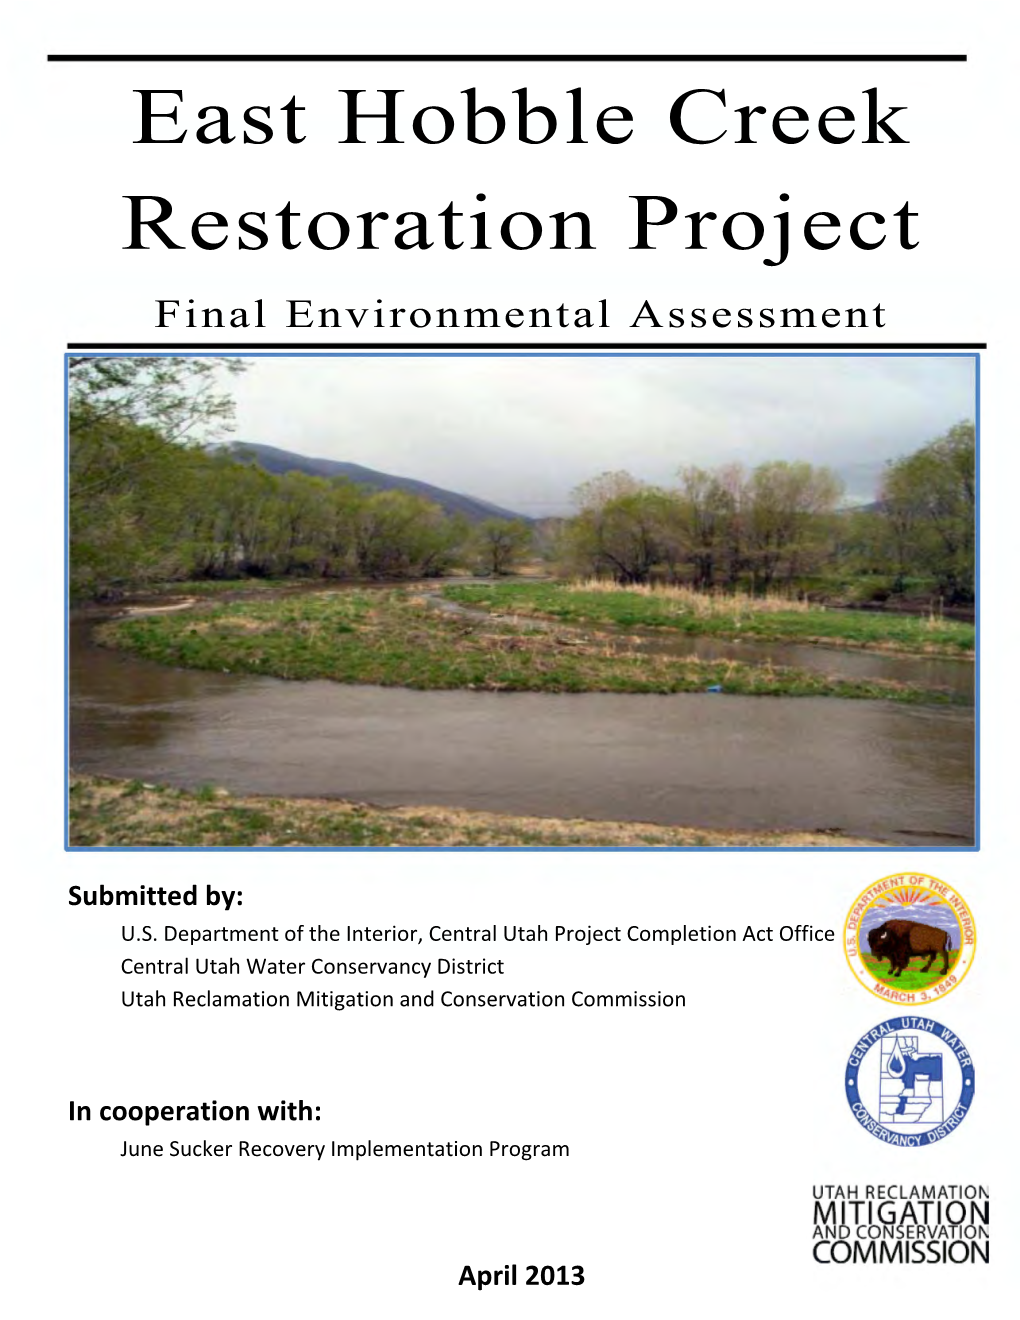 Final Environmental Assessment – East Hobble Creek Restoration Project